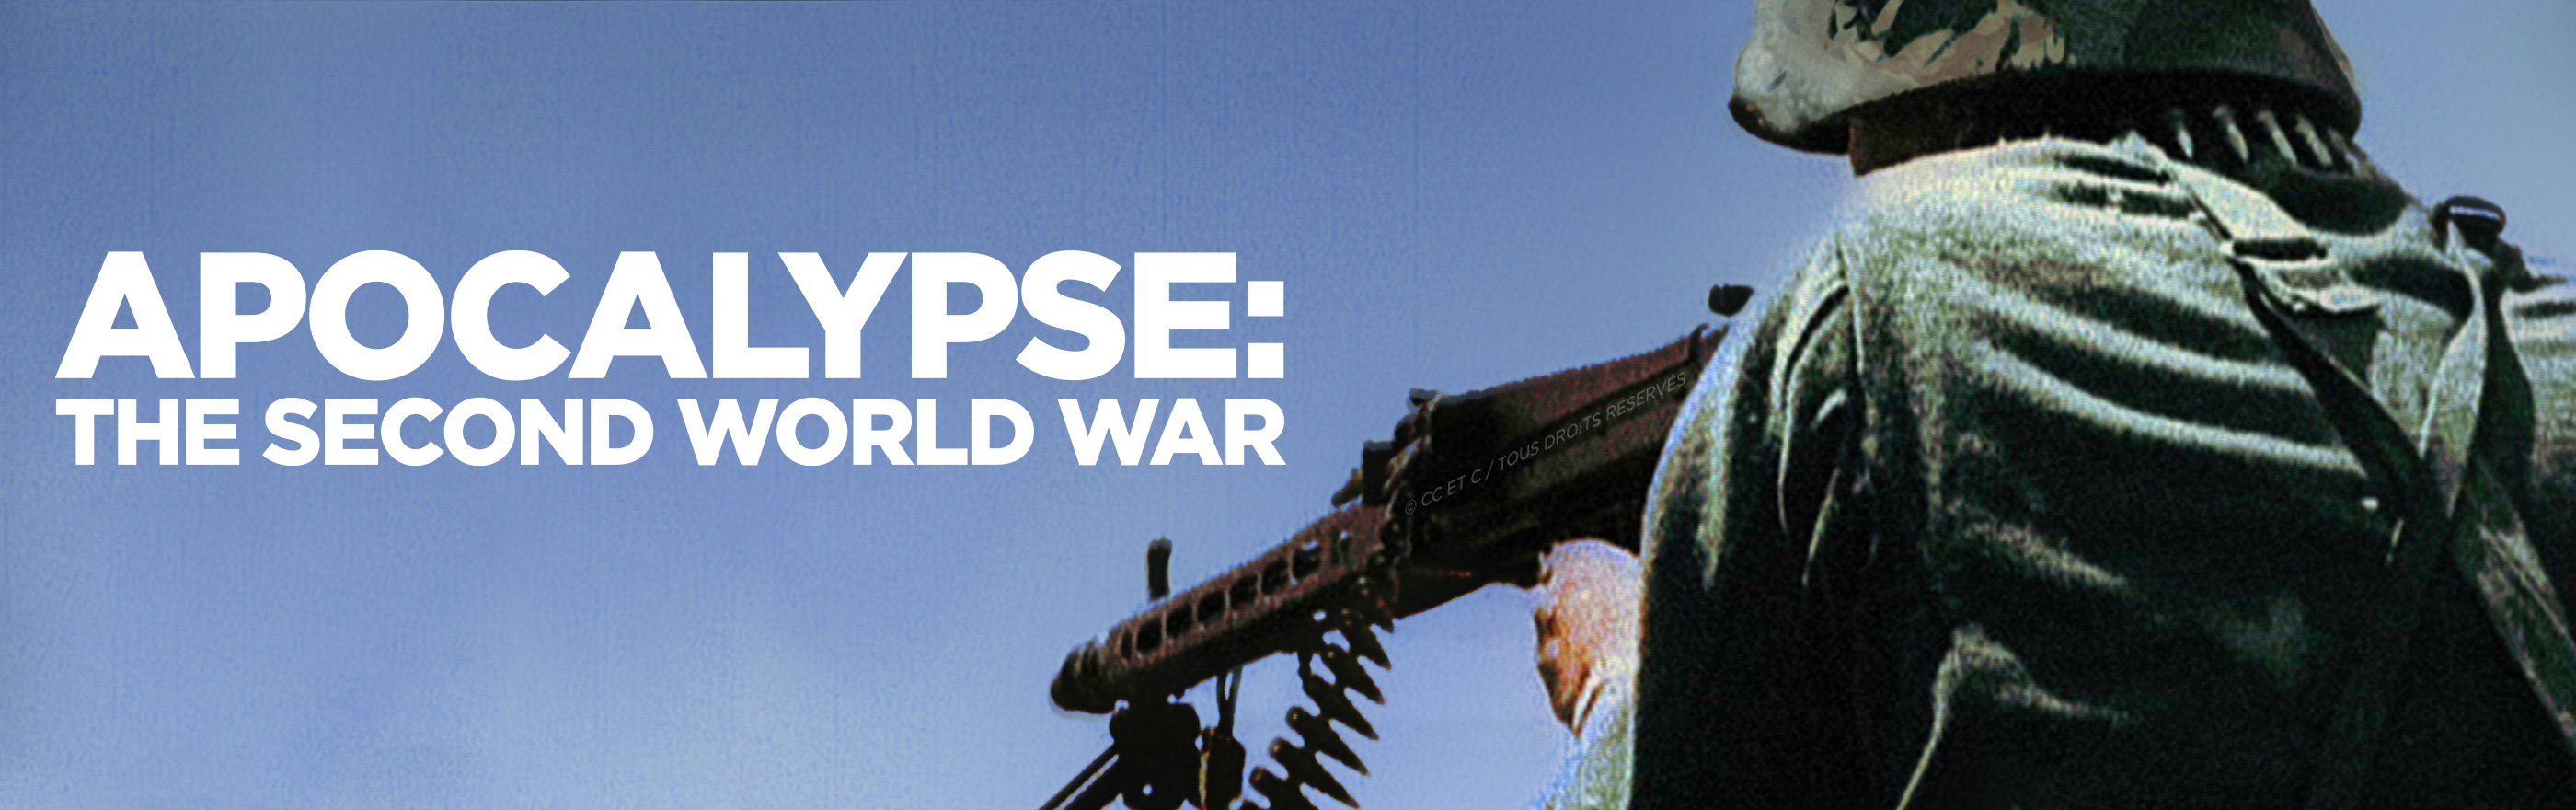 Apocalypse: The Second World War LOGO